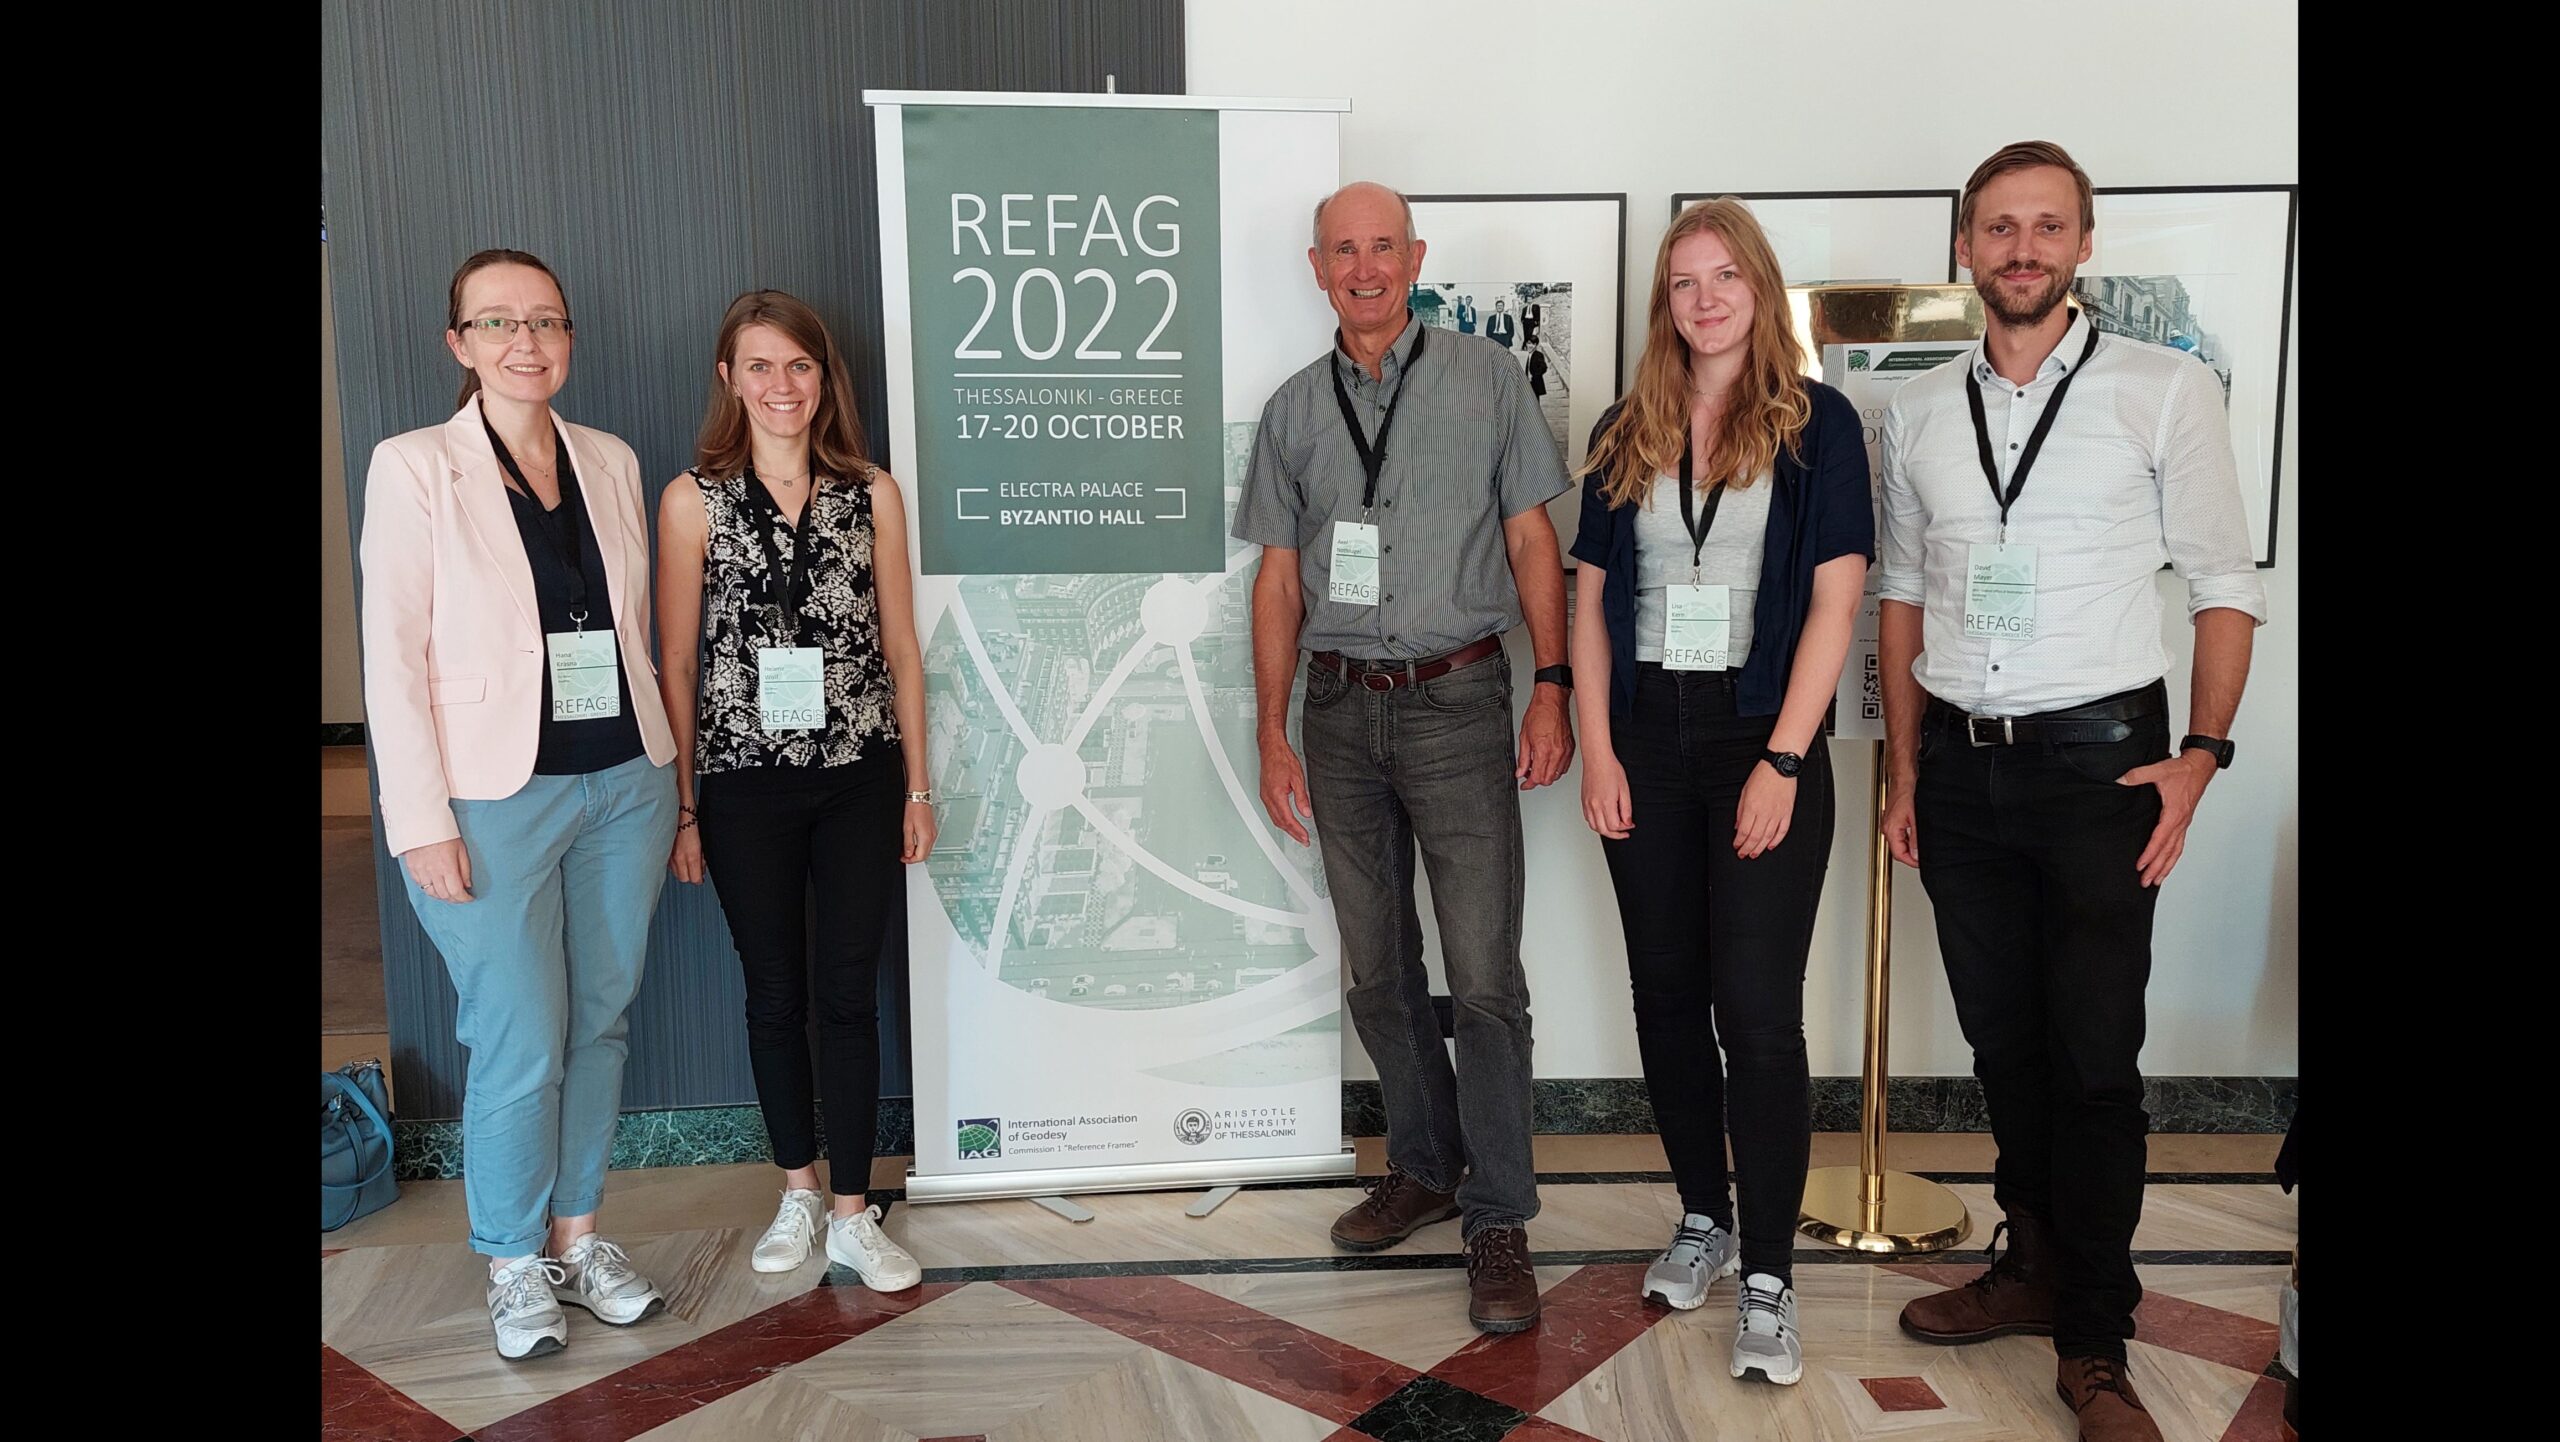 Vienna VLBI Group at REFAG 2022